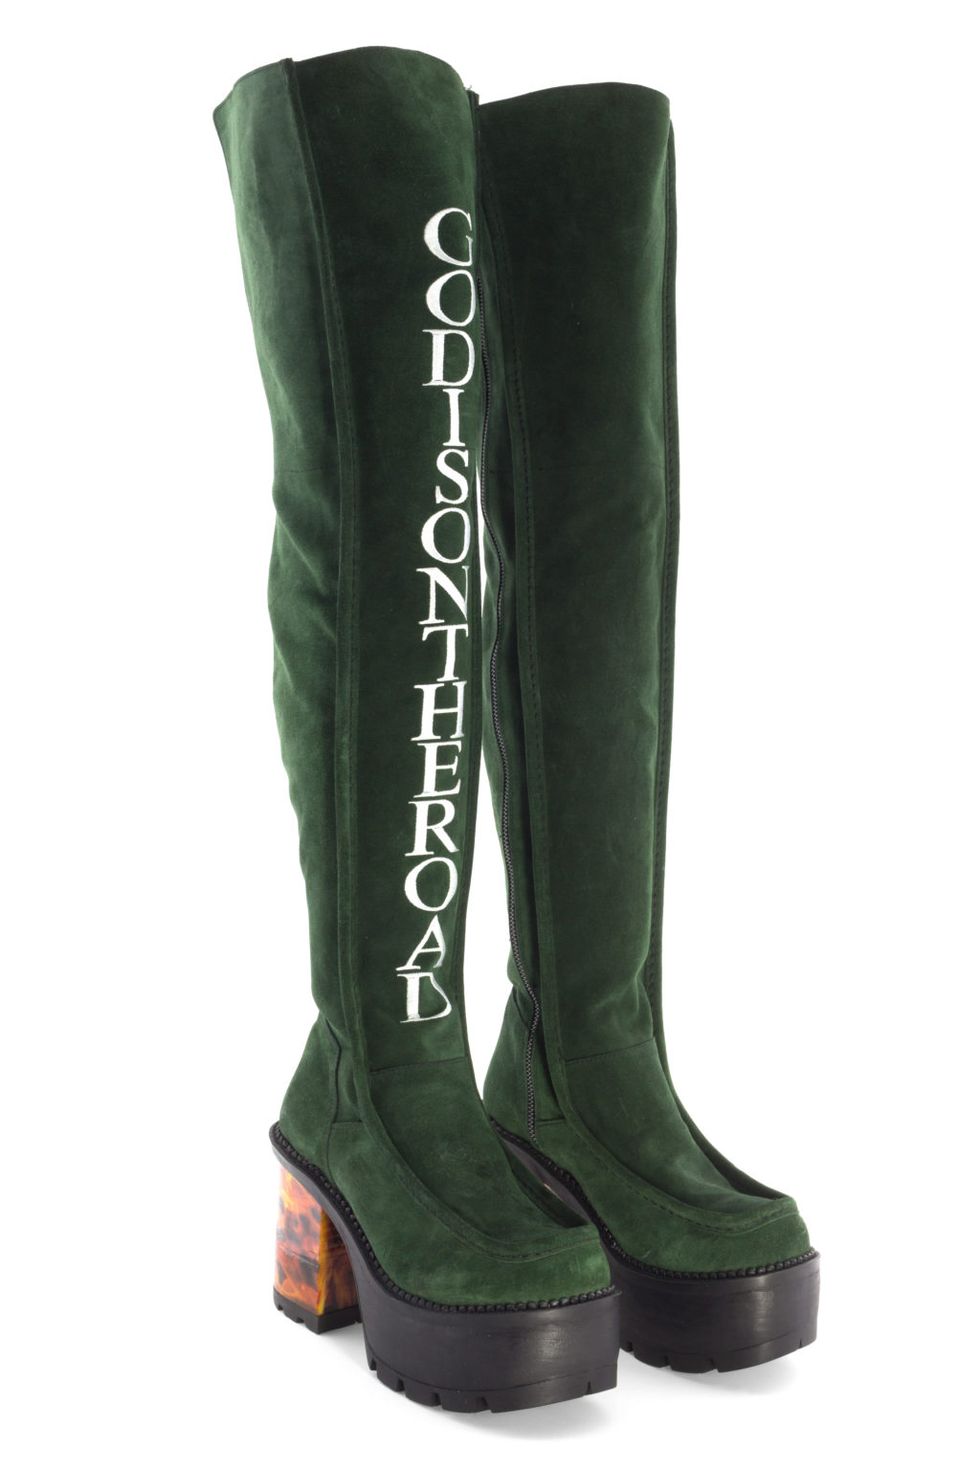 Footwear, Boot, Green, Shoe, Riding boot, Knee-high boot, Durango boot, Work boots, Rain boot, Suede, 